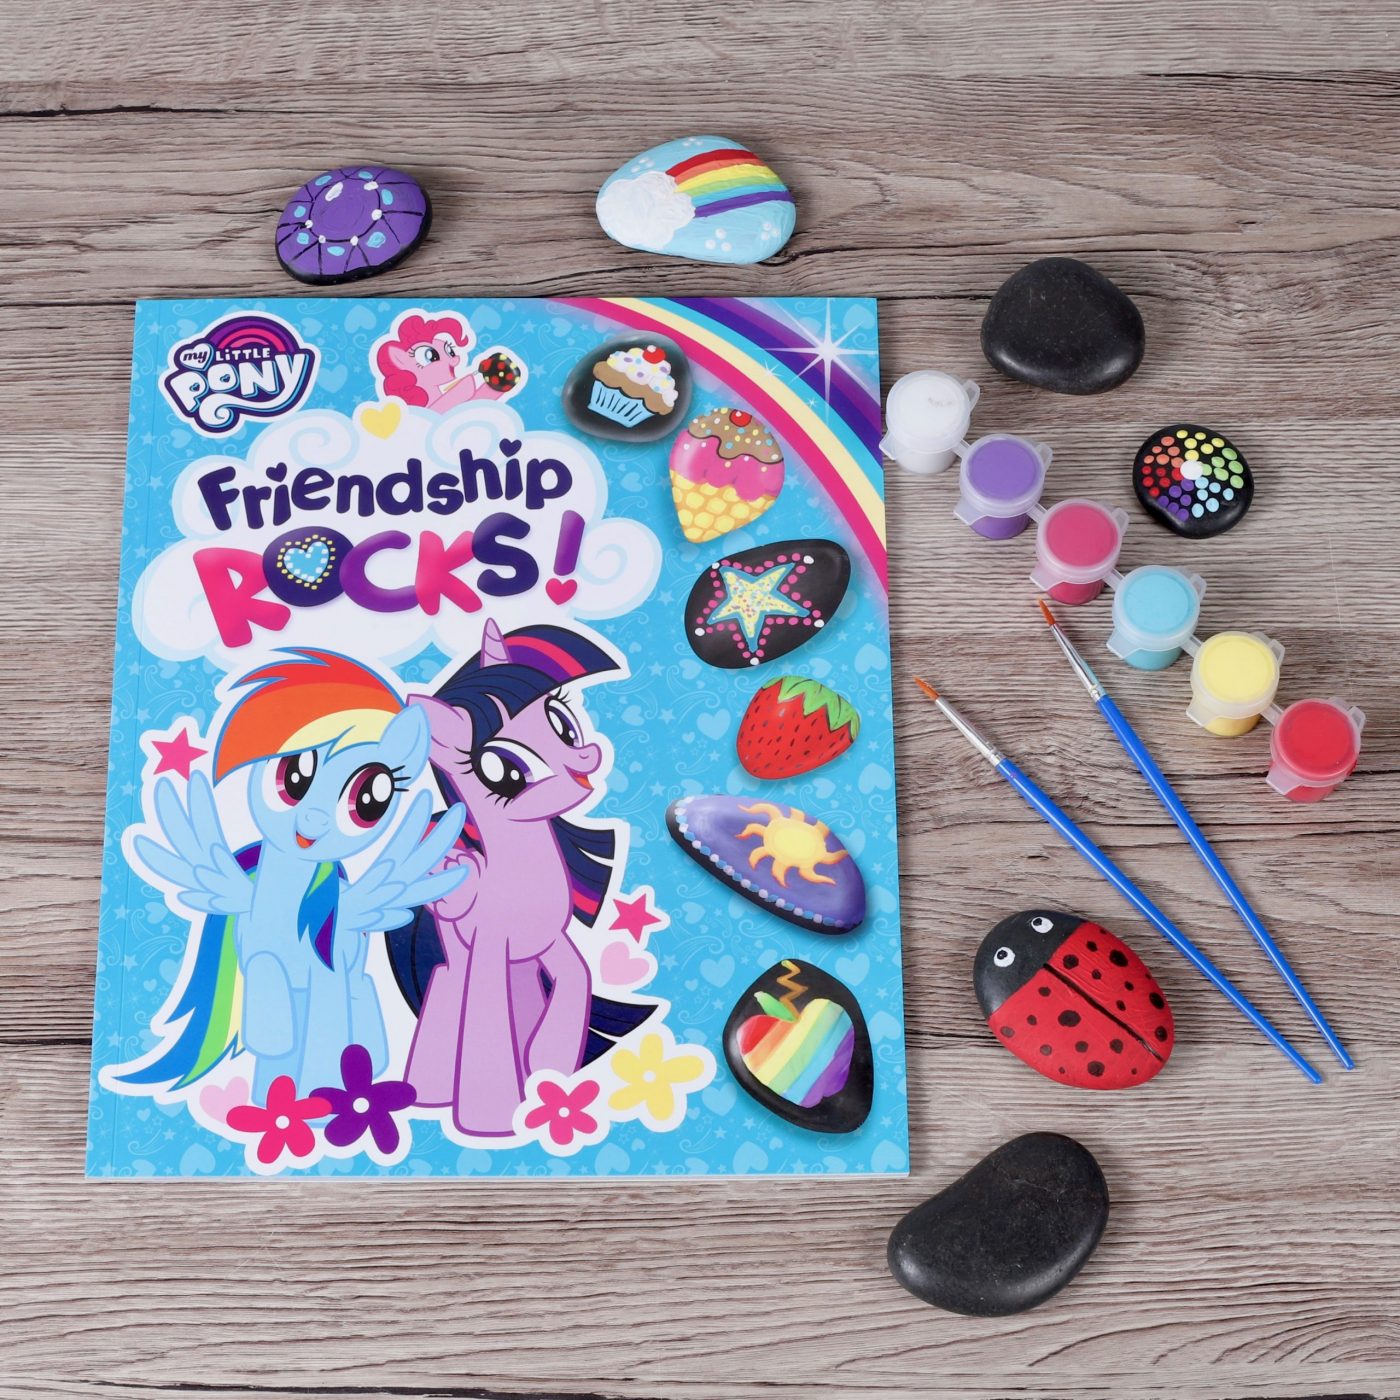 My Little Pony: Friendship Rocks!